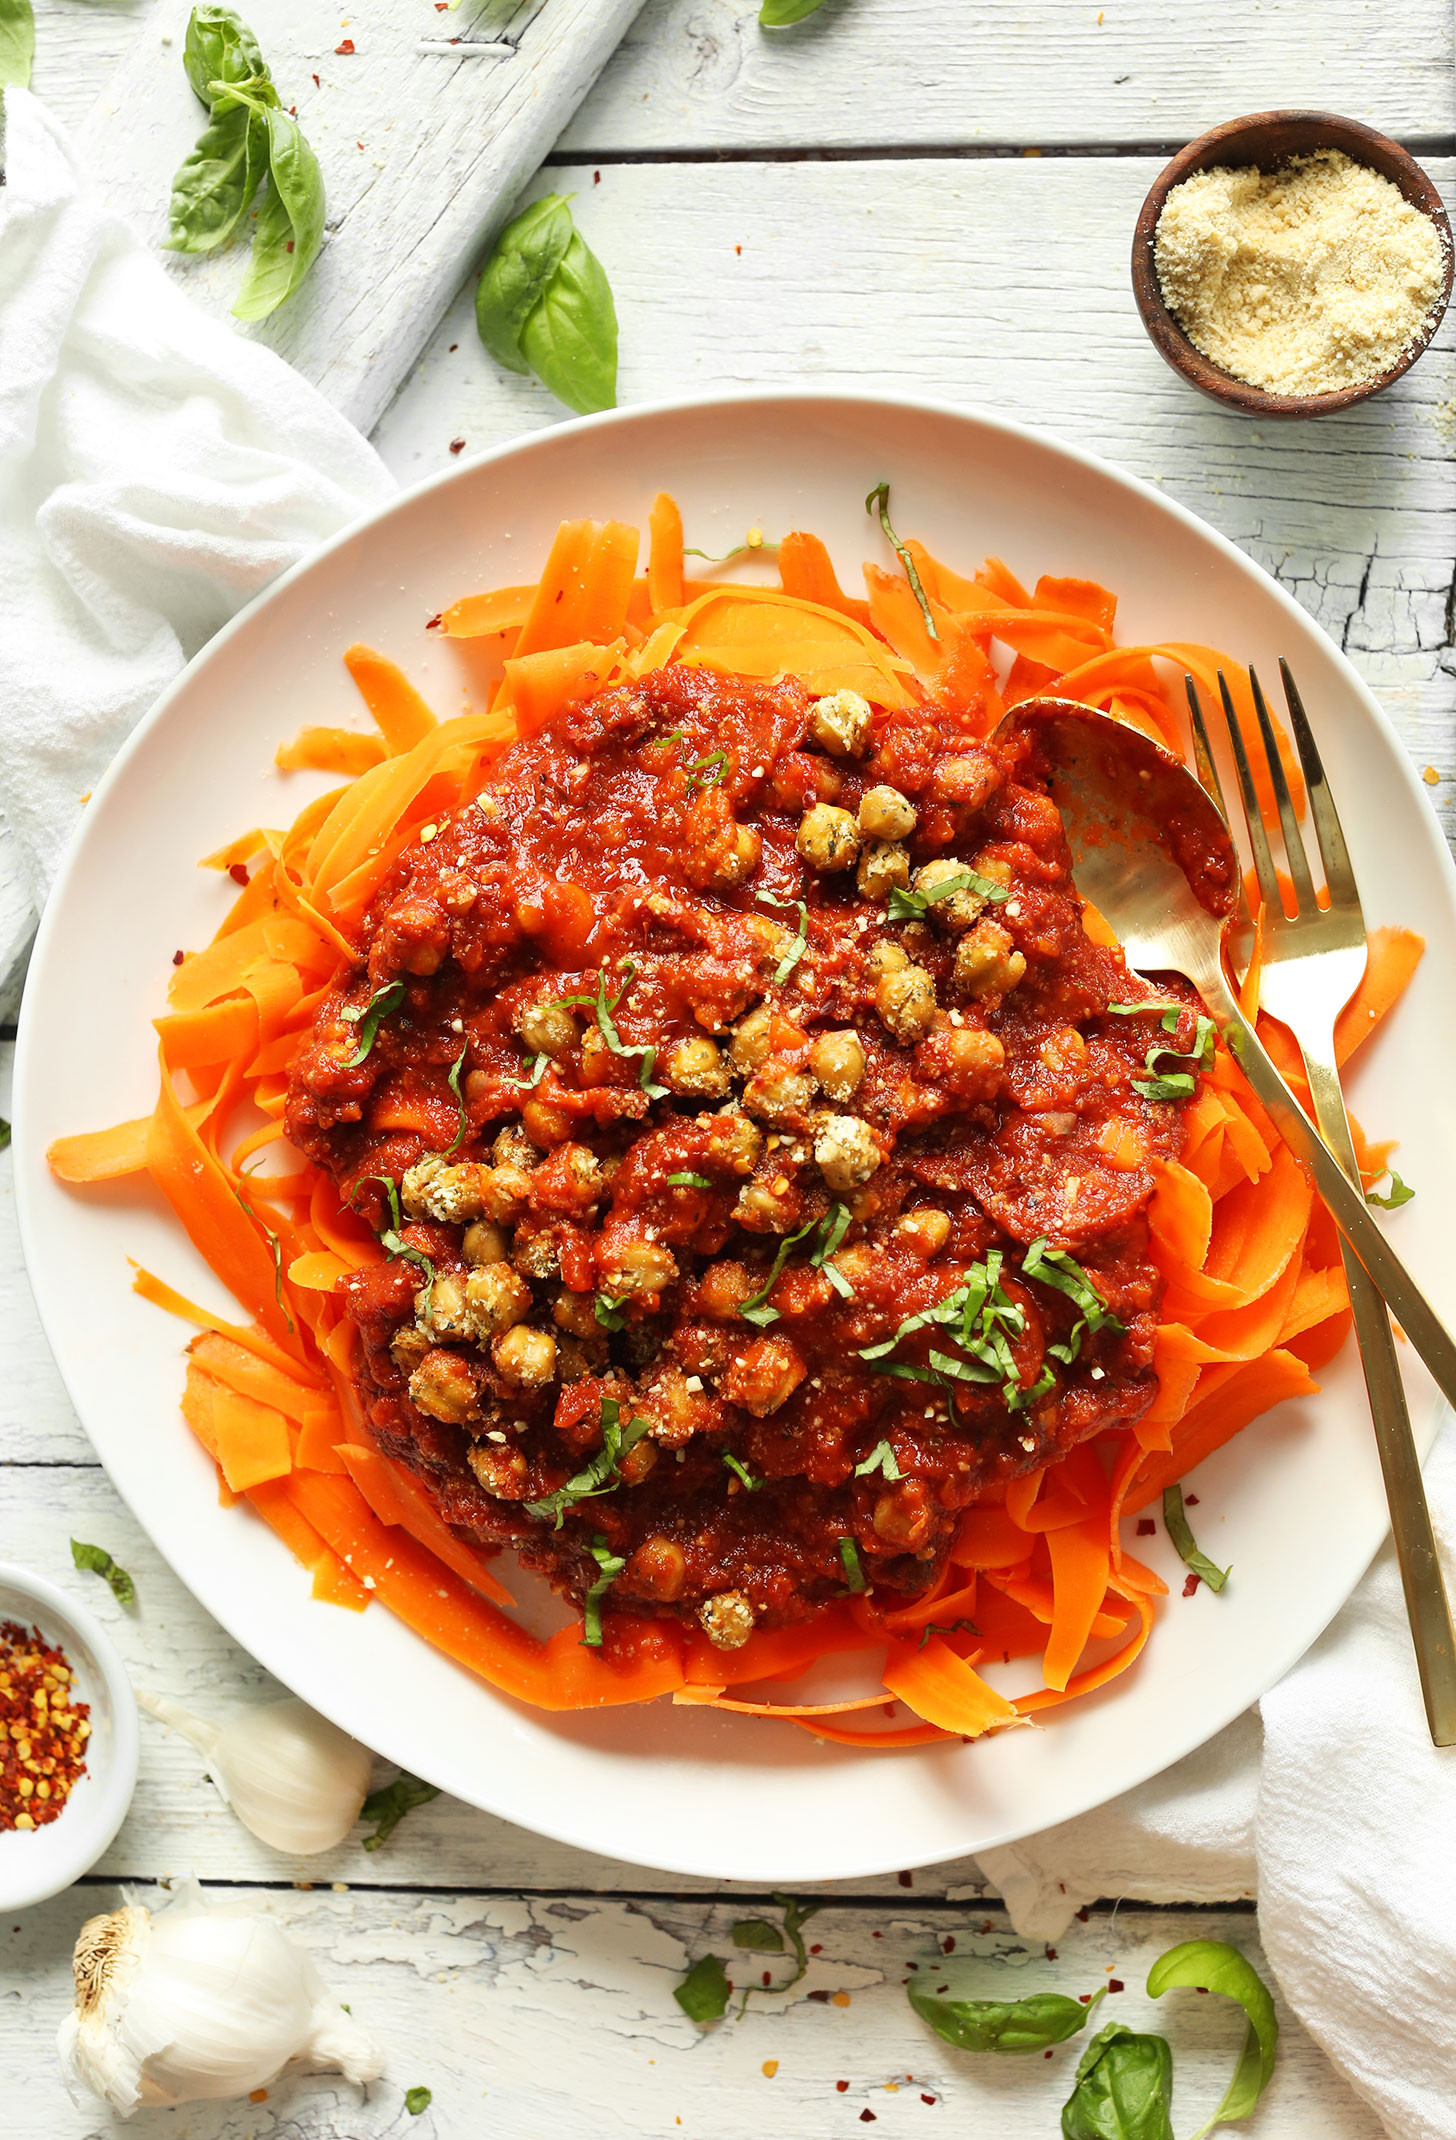 Delicious Vegetarian Dinner Recipes
 30 delicious vegan dinner recipes for happy tummies